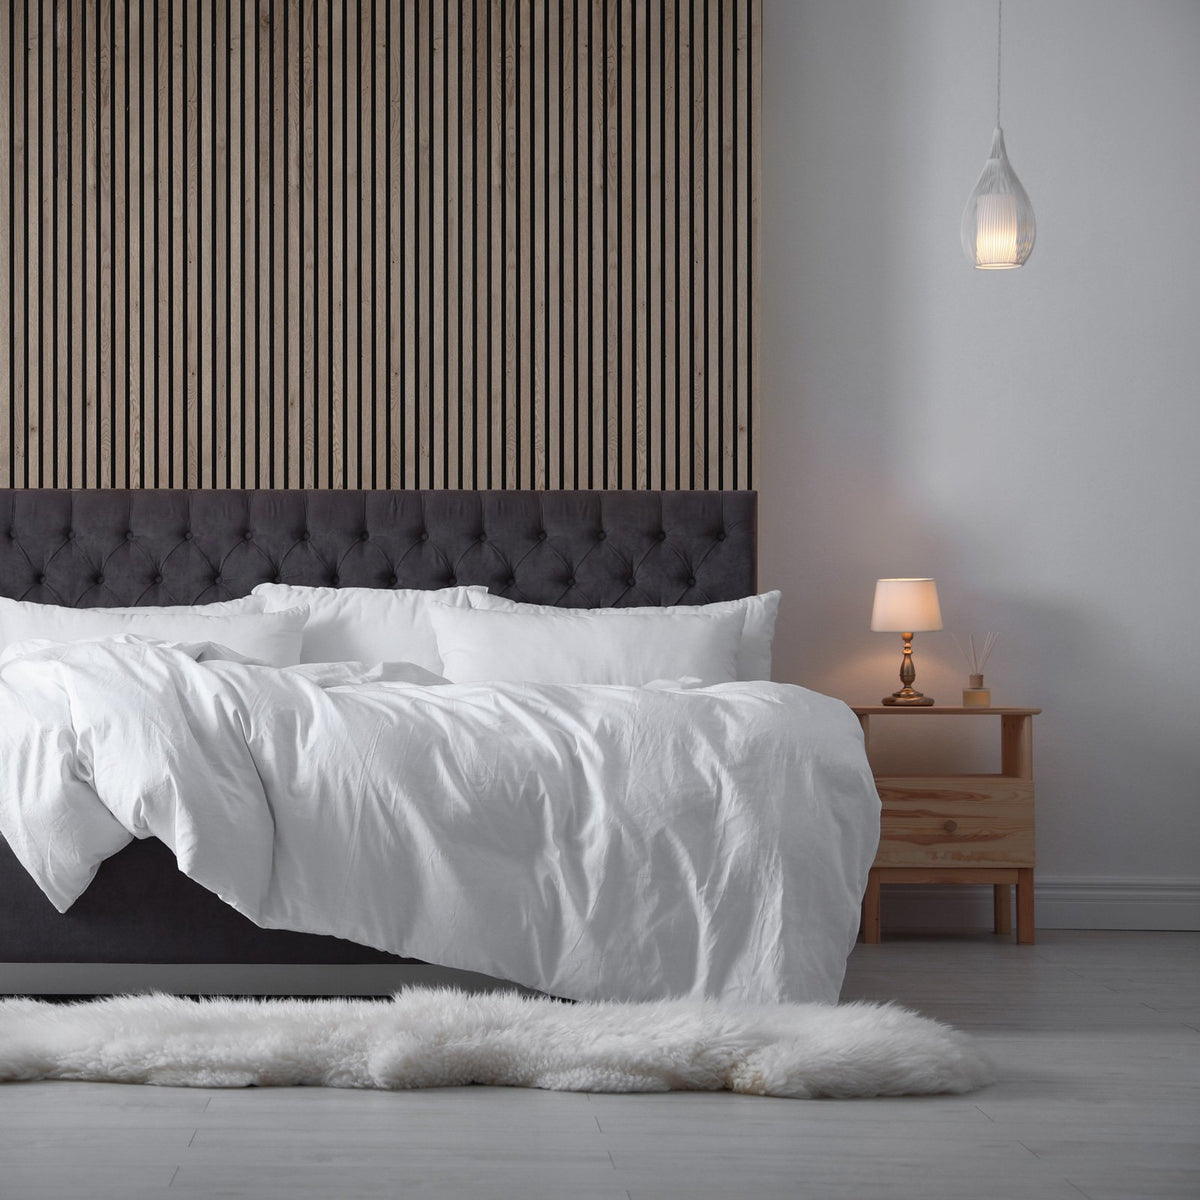 decorative bedroom wall panels | Interior Design Ideas